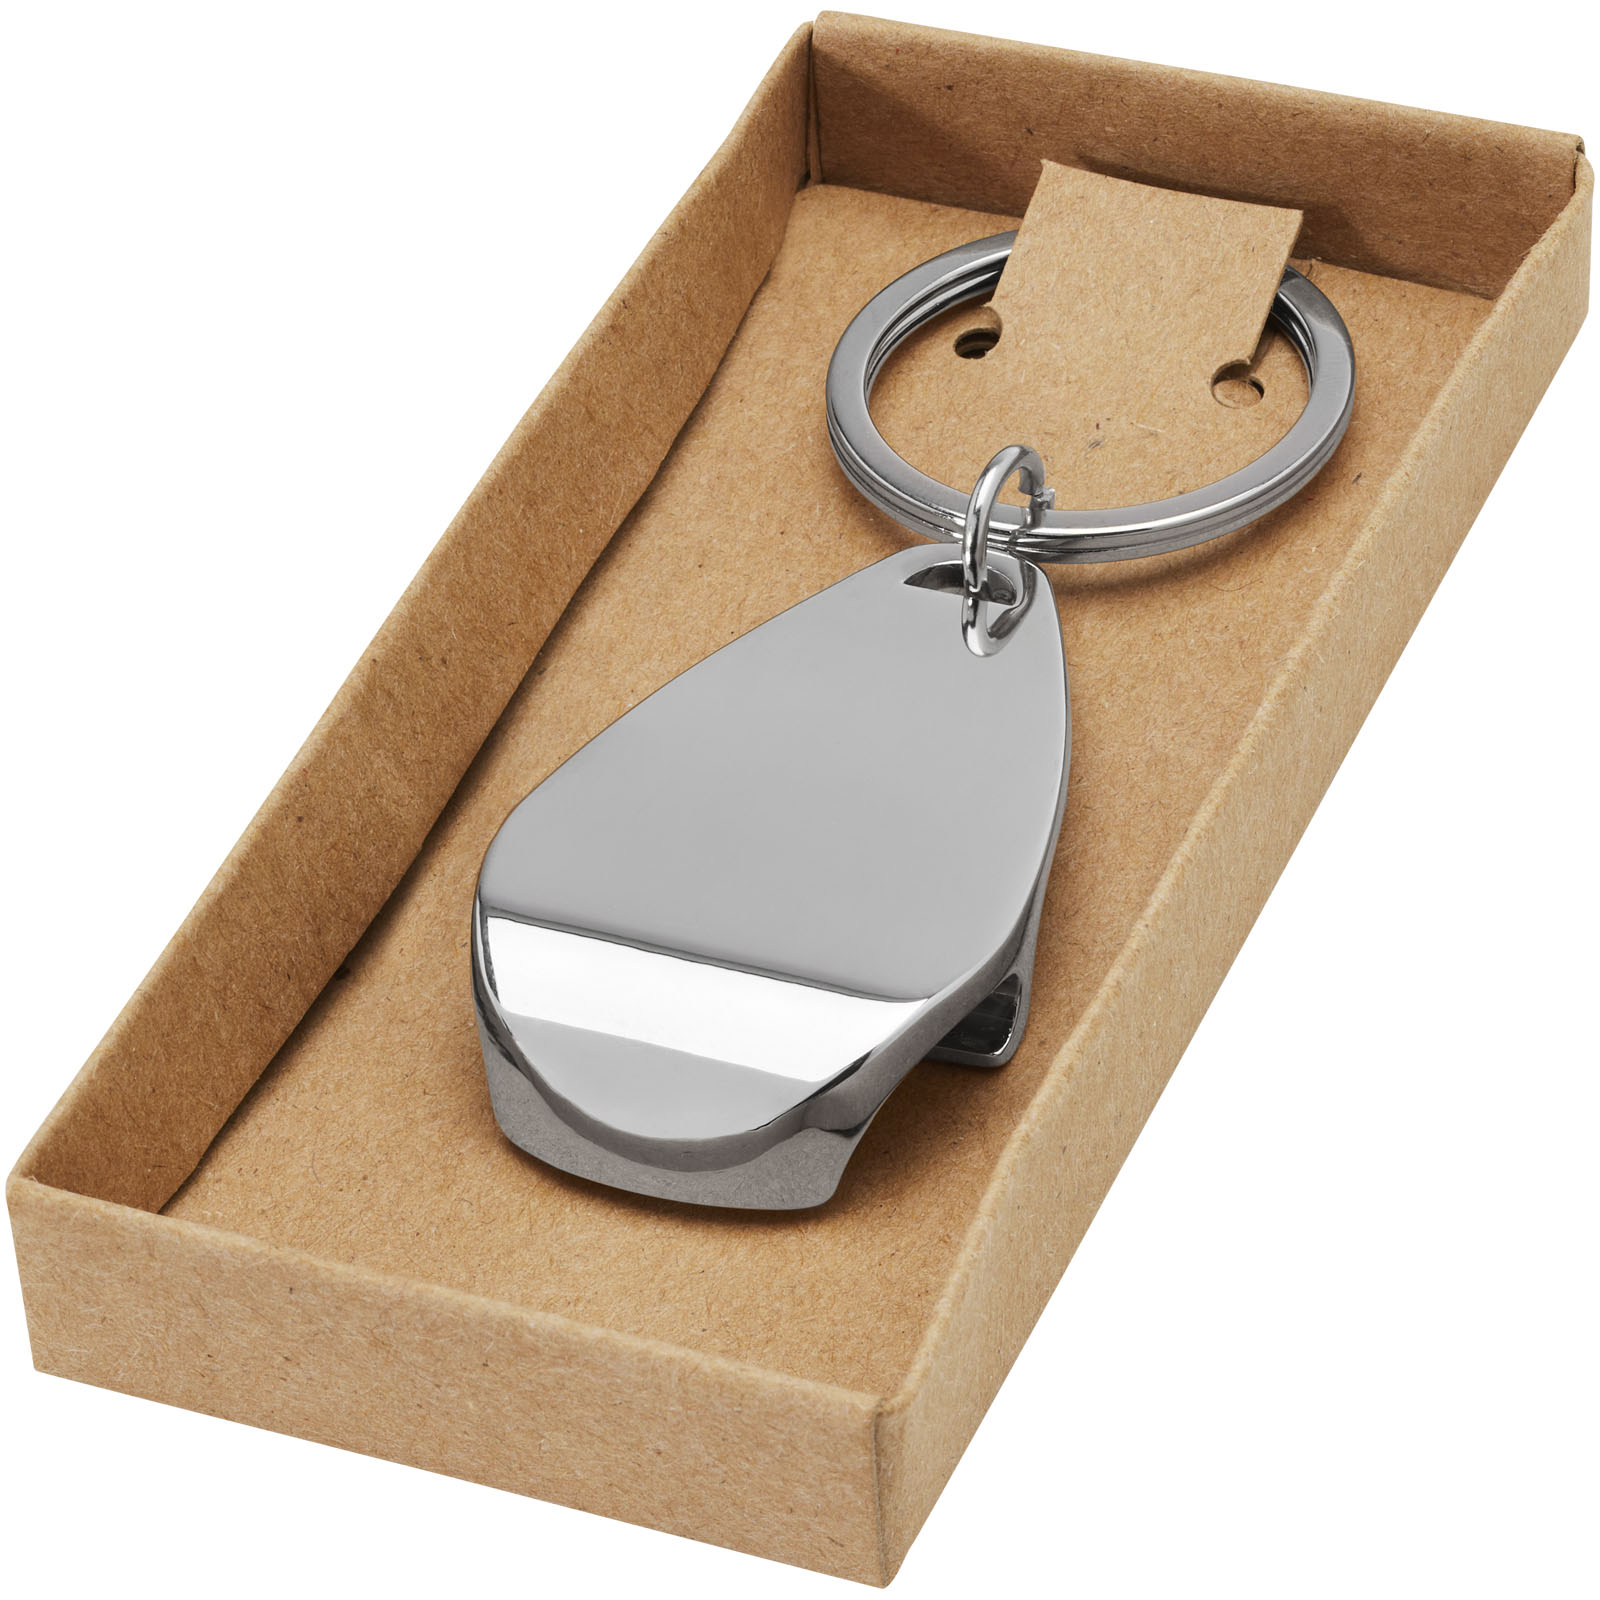 Advertising Bottle Openers & Accessories - Don bottle opener keychain